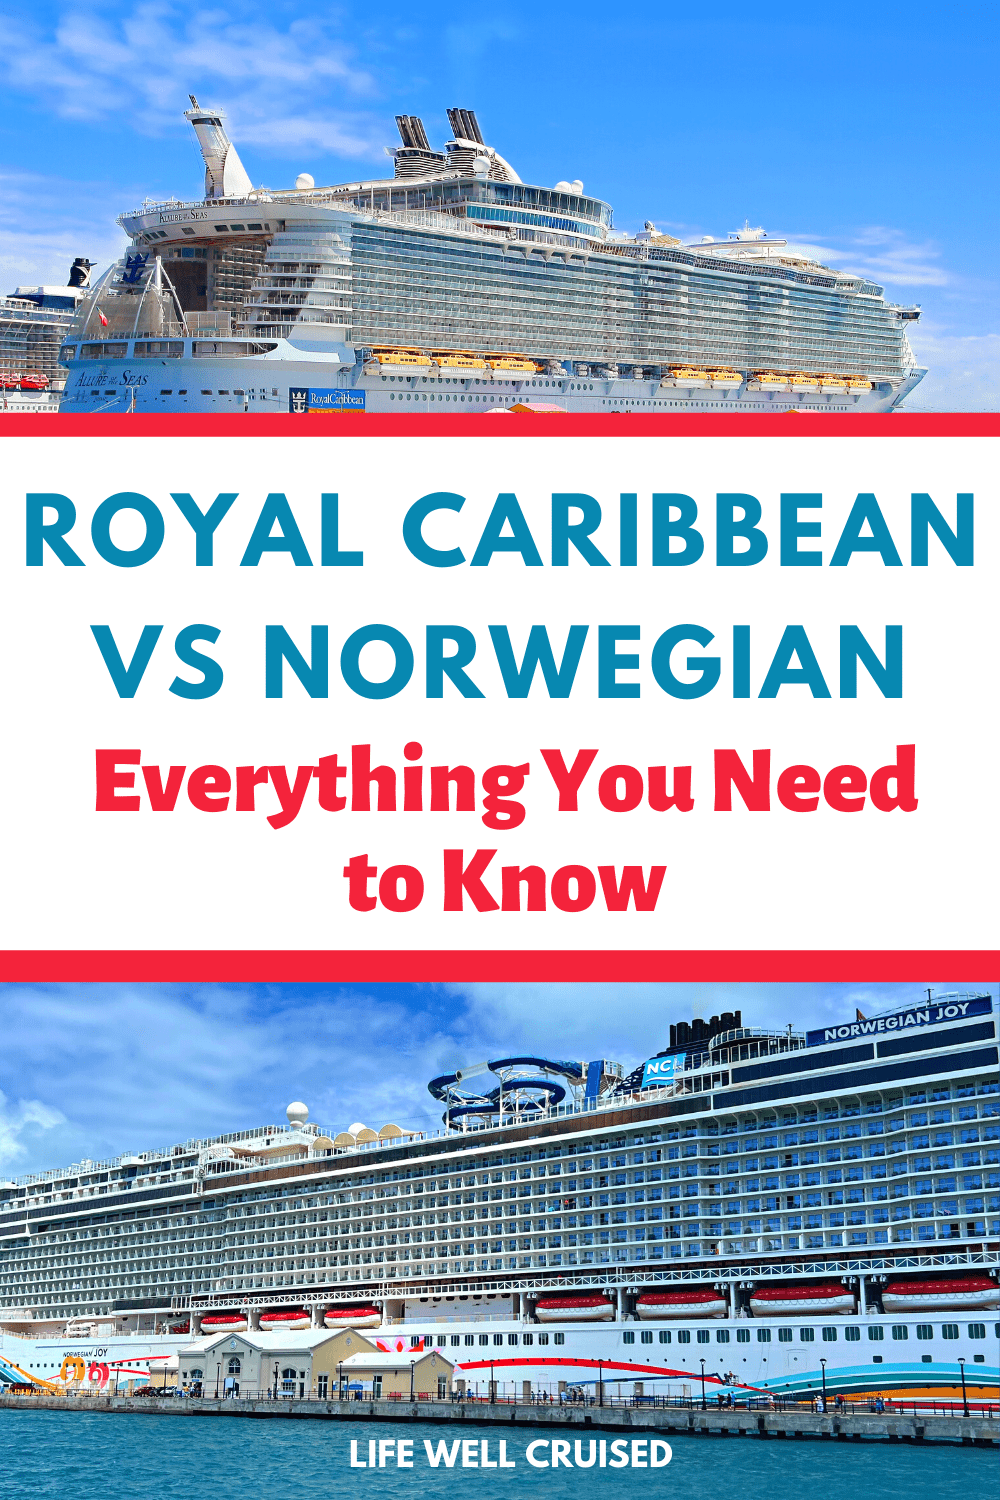 Royal Caribbean vs Norwegian